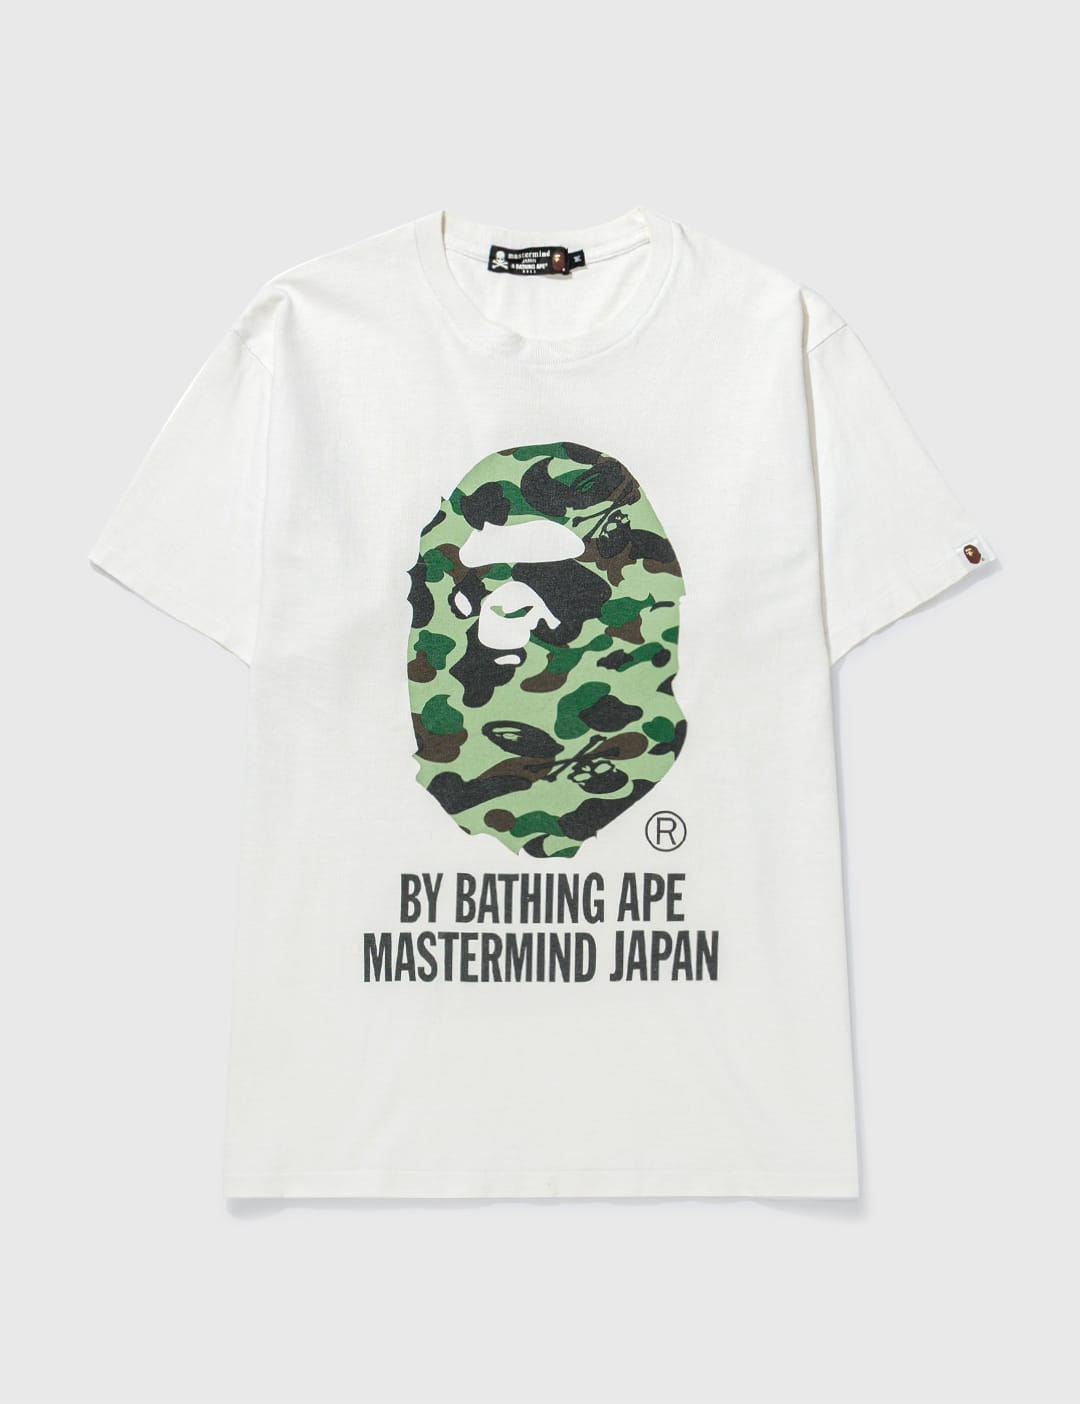 Mastermind Japan A bathing ape Tee Tシャツエイプマスターマインド